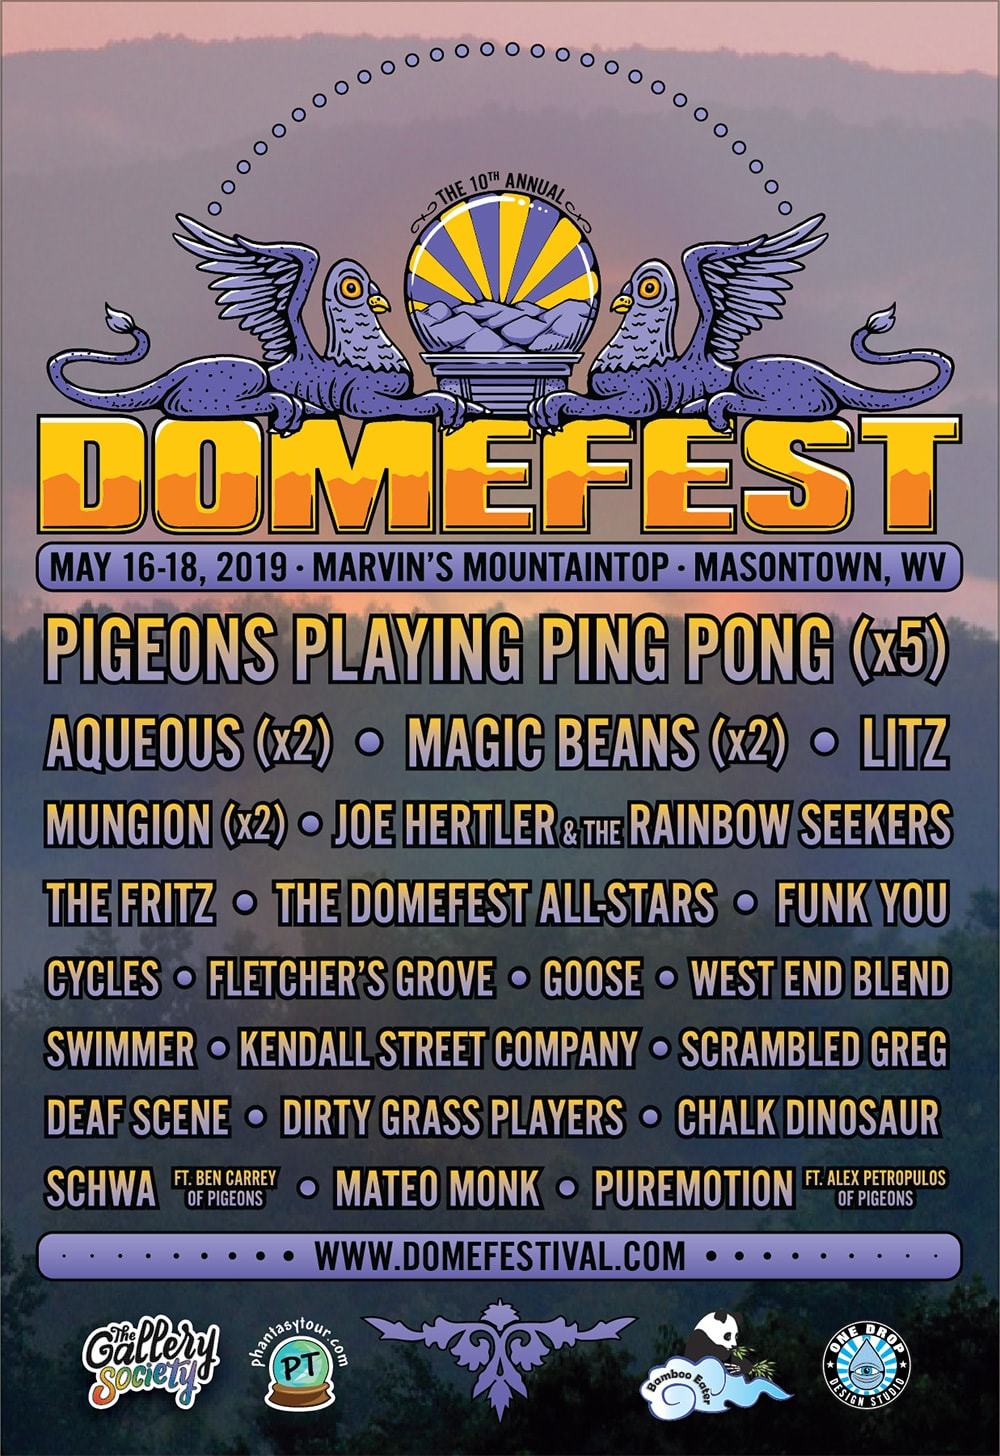 Domefest 2019 - Final Lineup